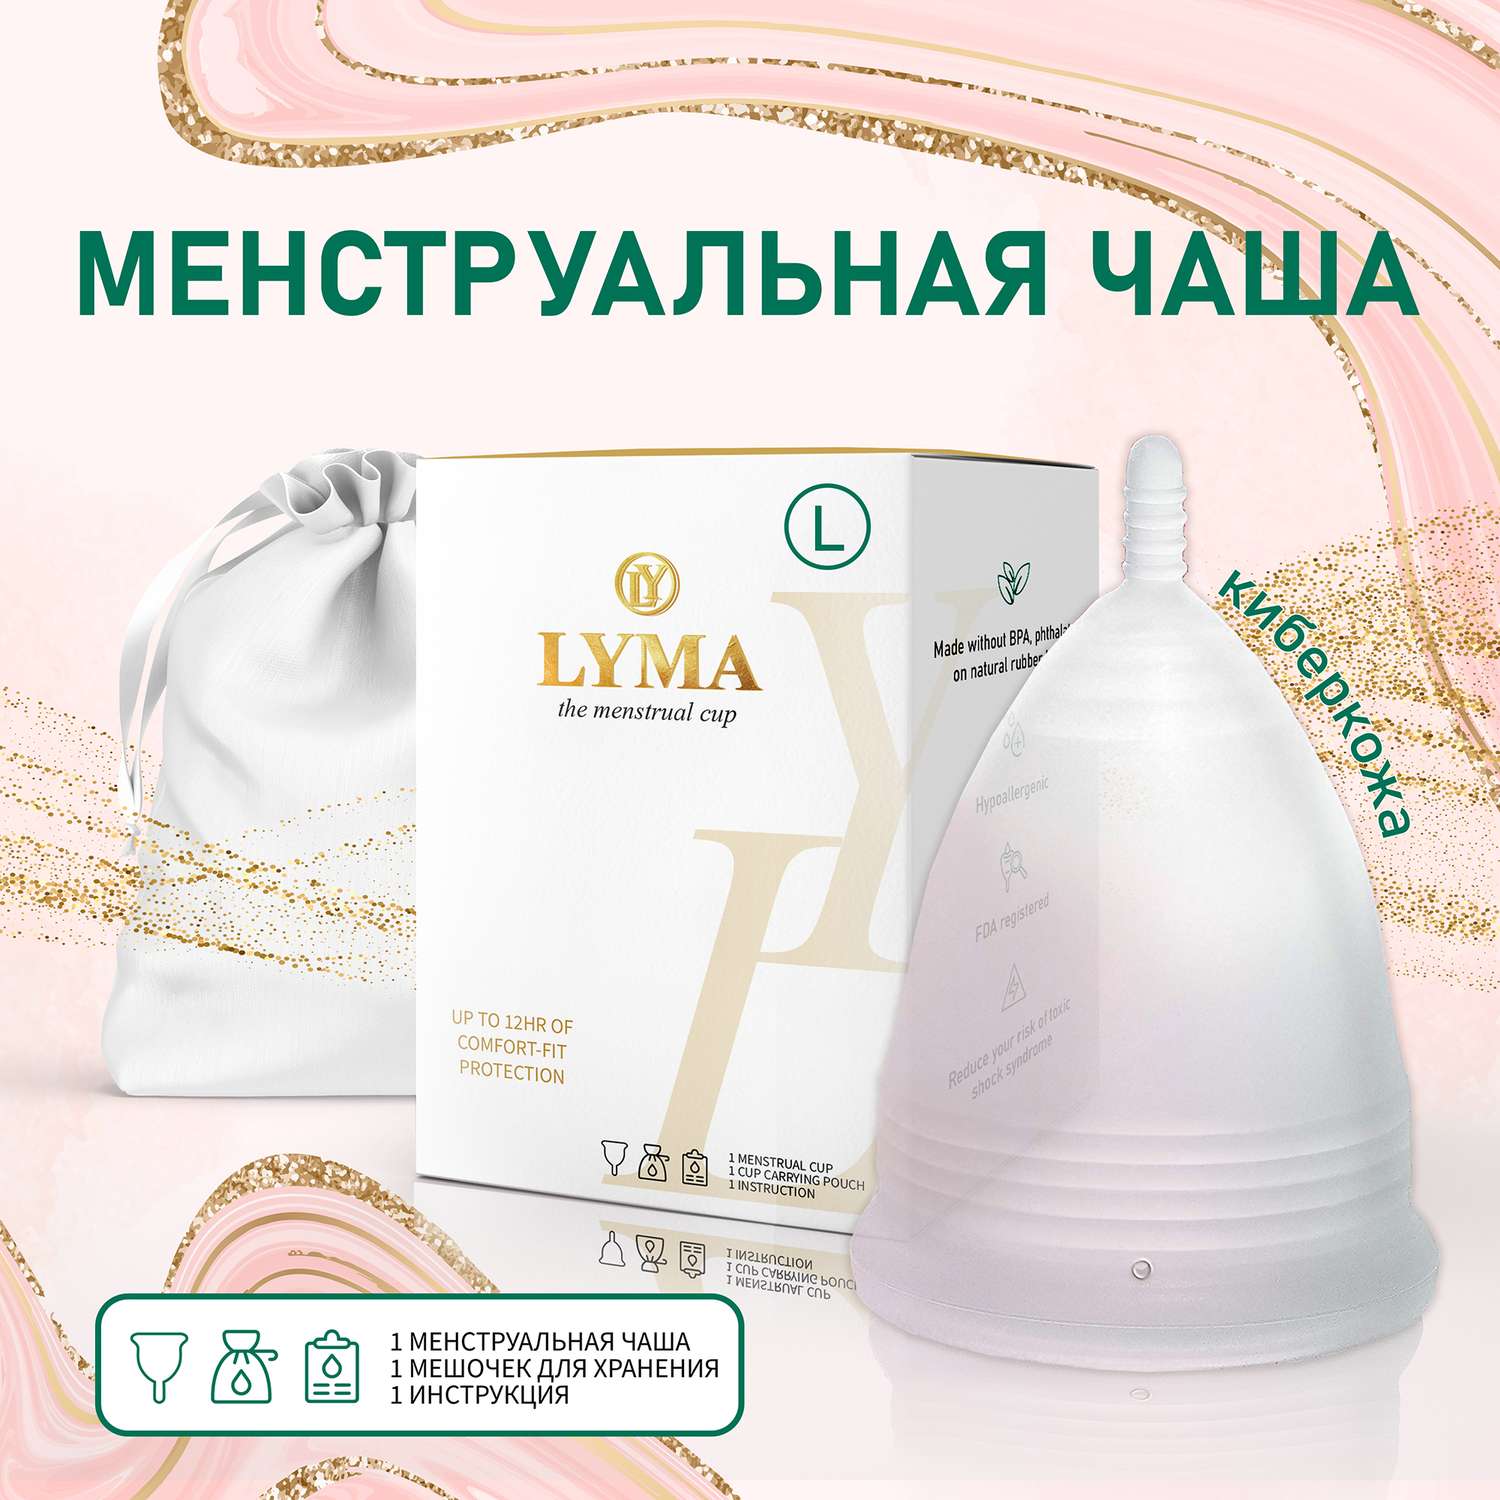 Чаша менструальная LYMA CUP многоразовая размер L - фото 2